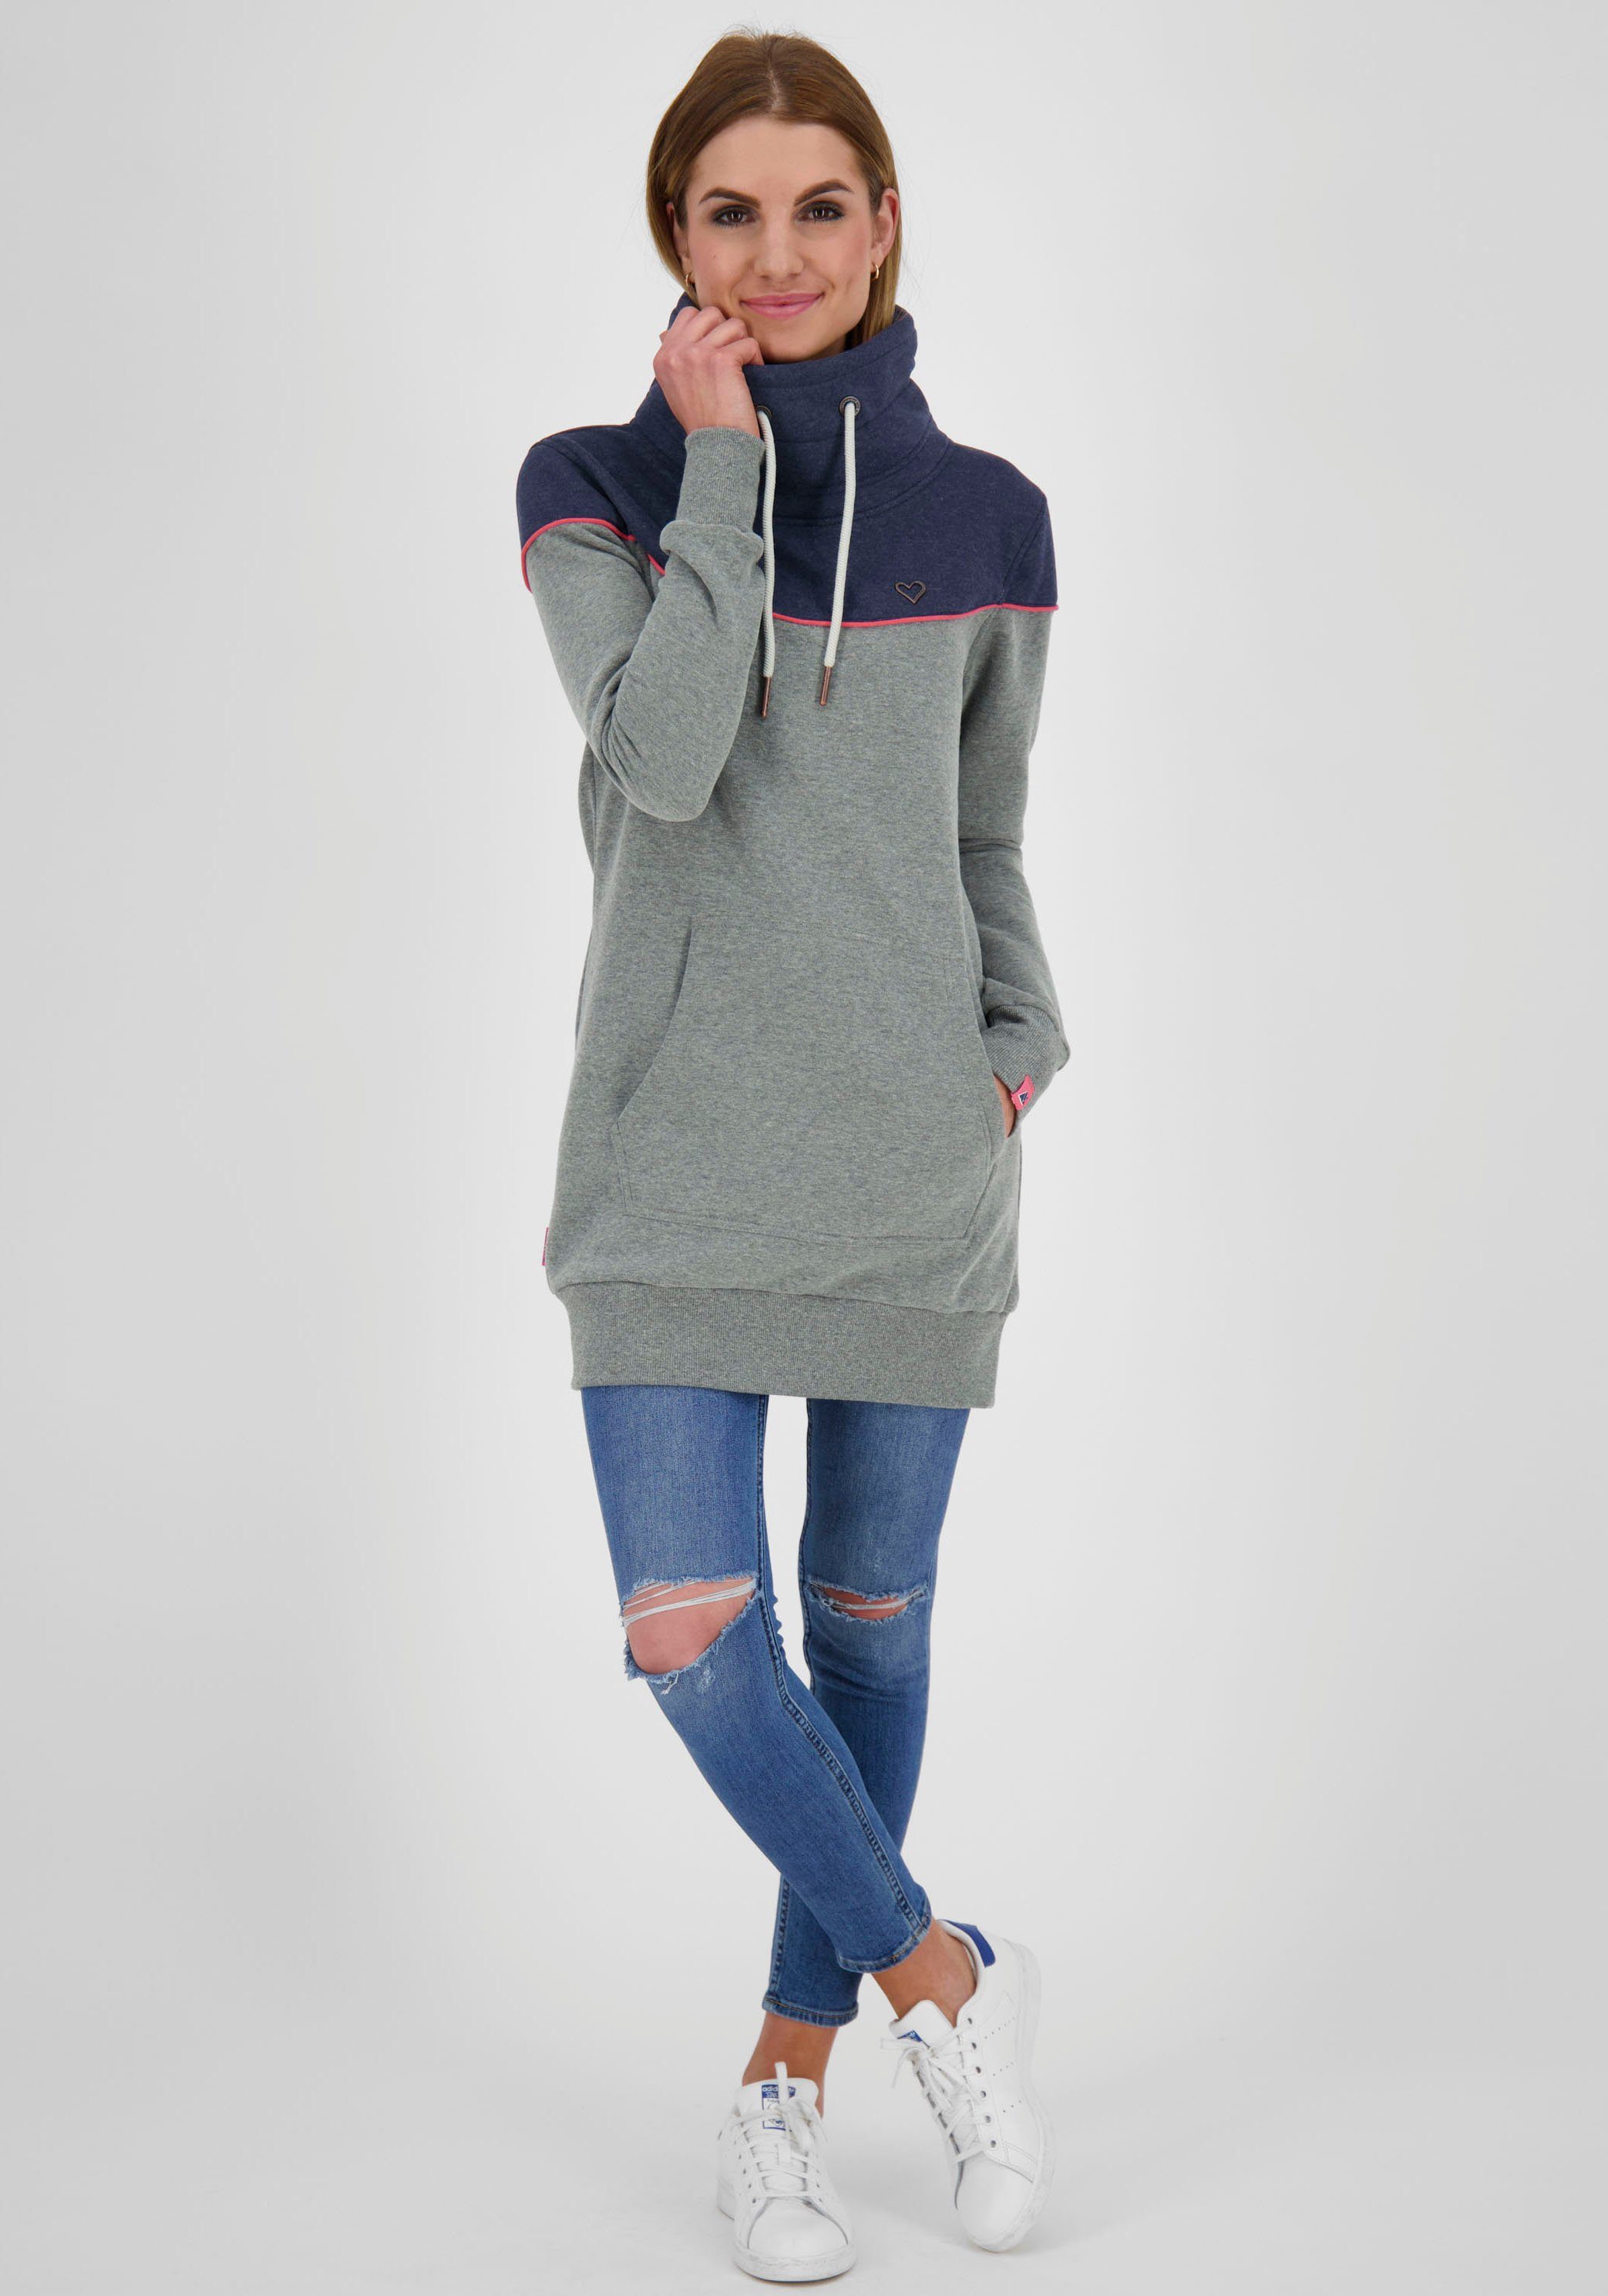 Jerseykleid Kontrastdetails Alife sportiver mit langer Sweater ValaAK in Form Kickin &